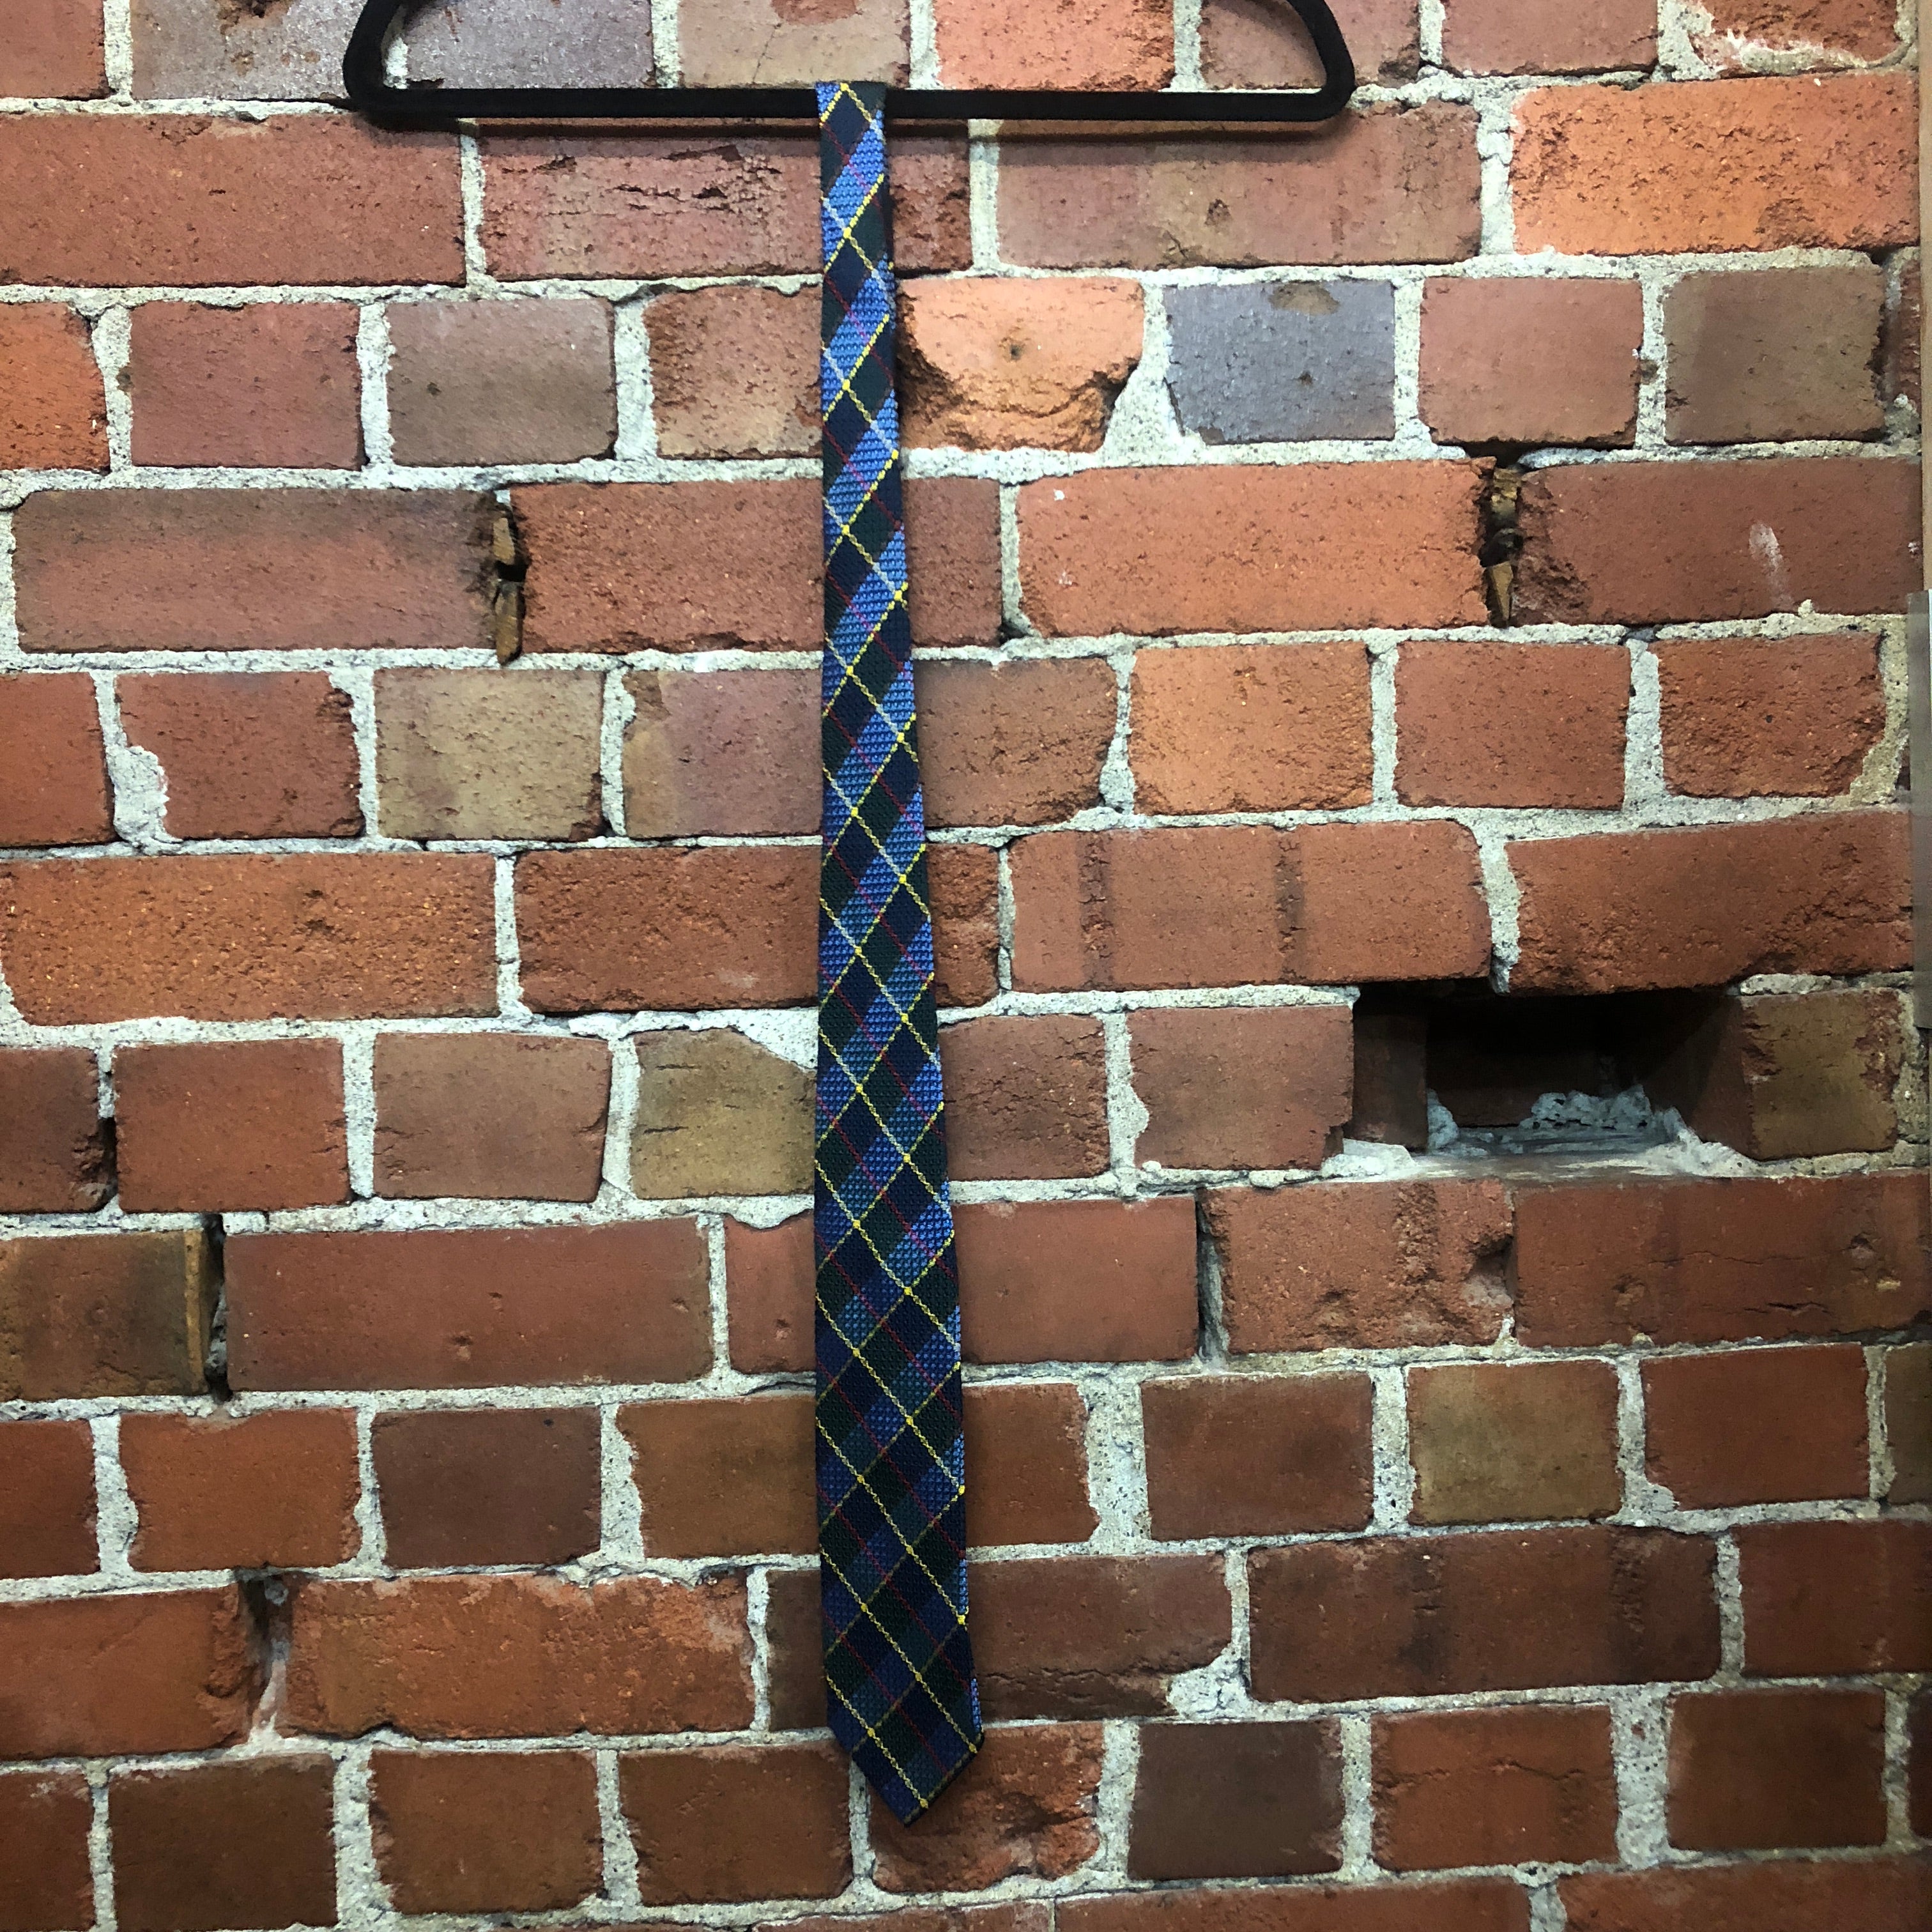 DRAKES of London tie